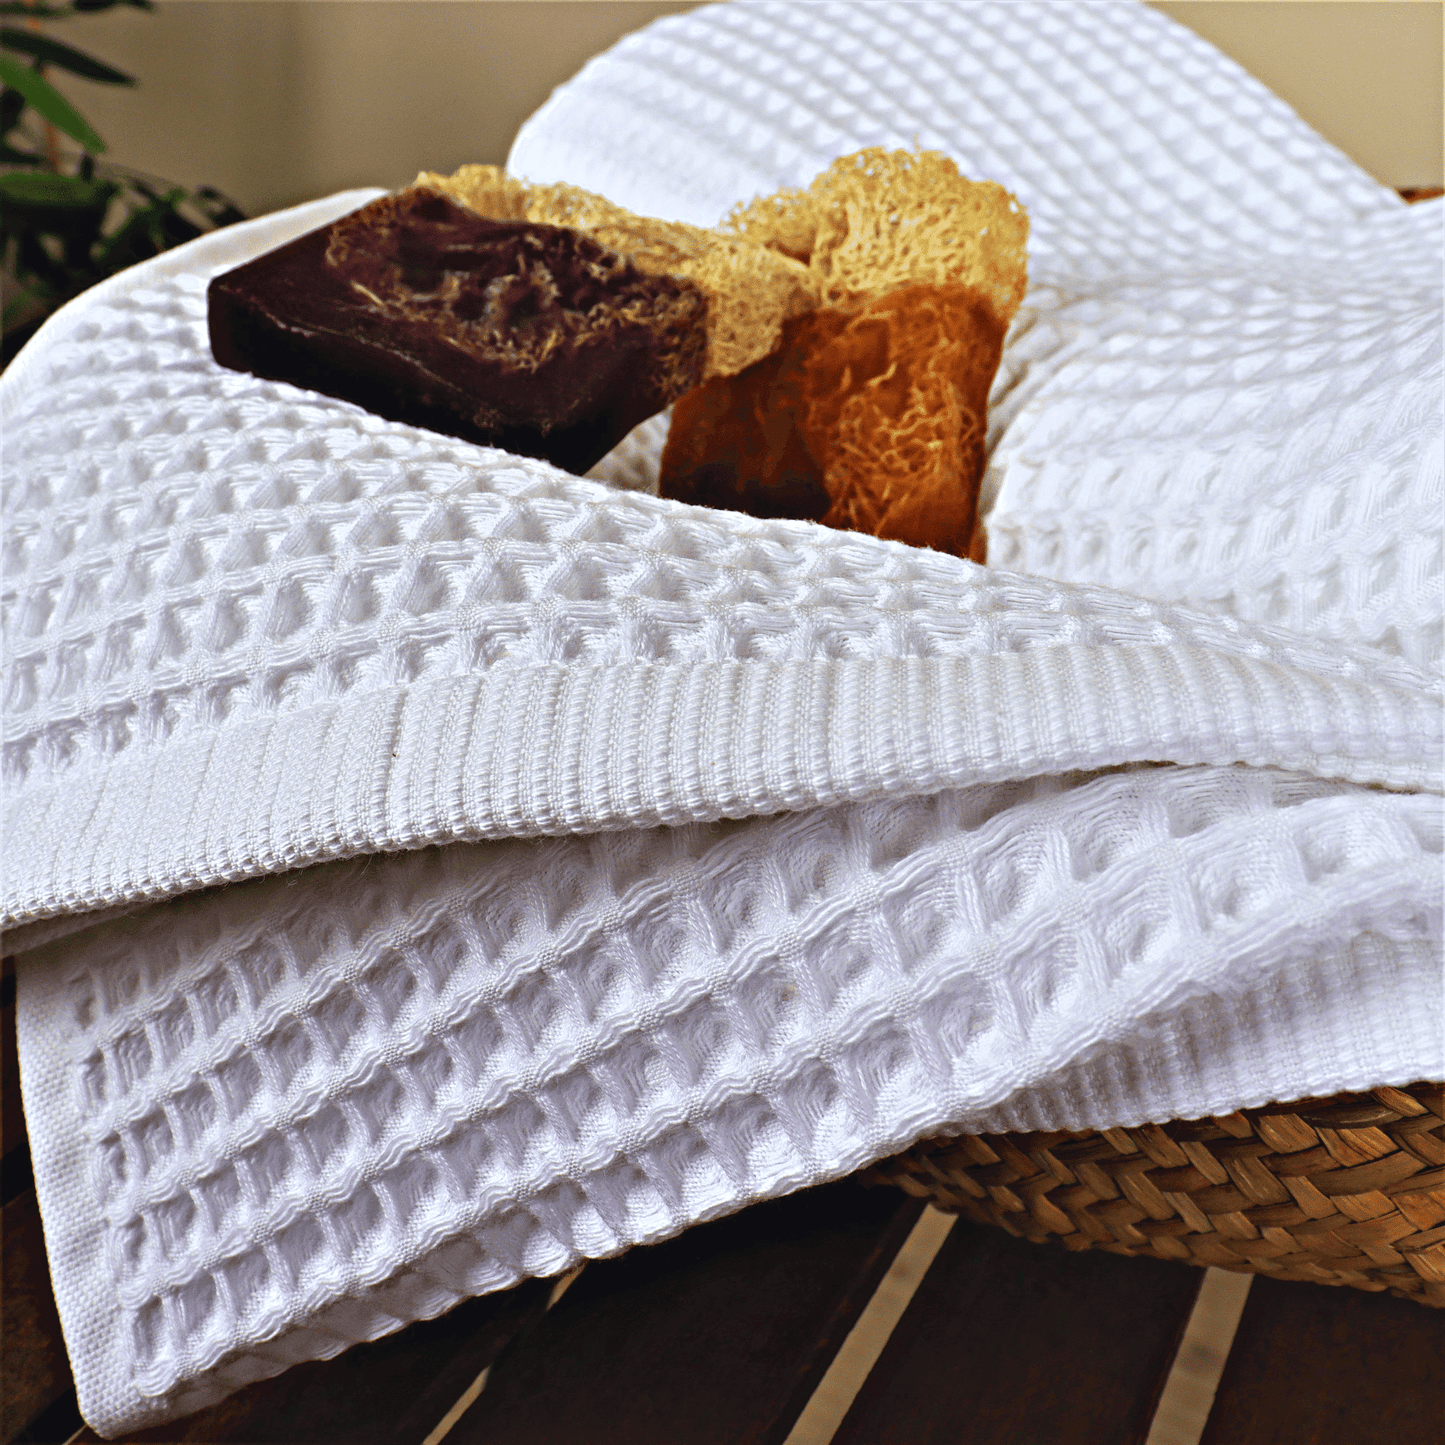 White Waffle Weave Towels Sets - 2 Bath, 2 Hand Towels